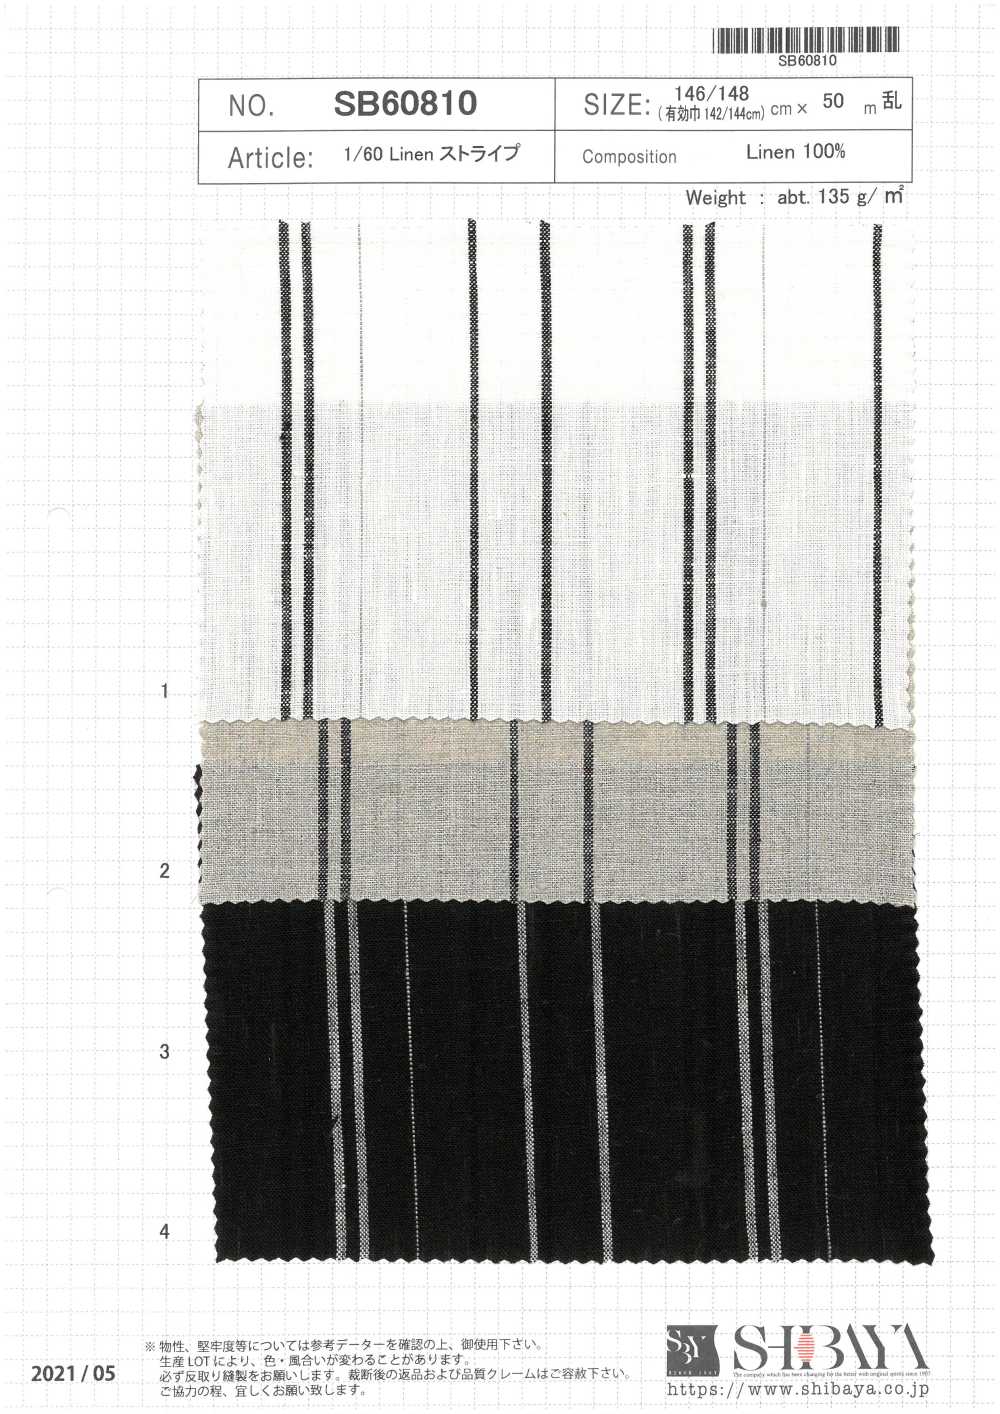 SB60810 1/60 Leinenstreifen[Textilgewebe] SHIBAYA